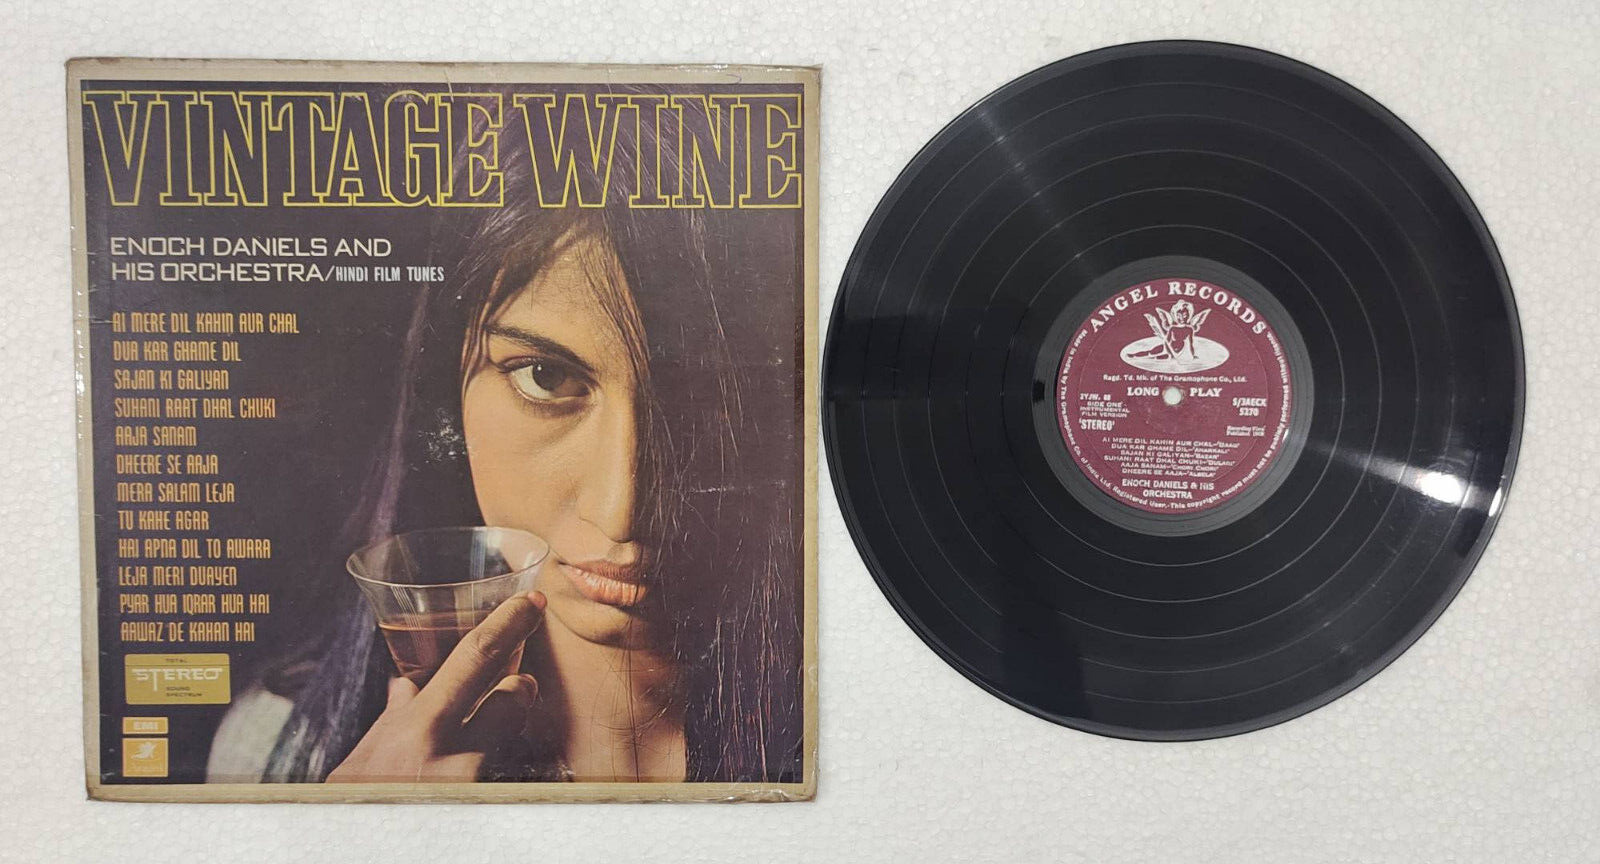 Vintage Wine, Instrumental Film Version Angel OST Vinyl 33 1/3 RPM Lp Record